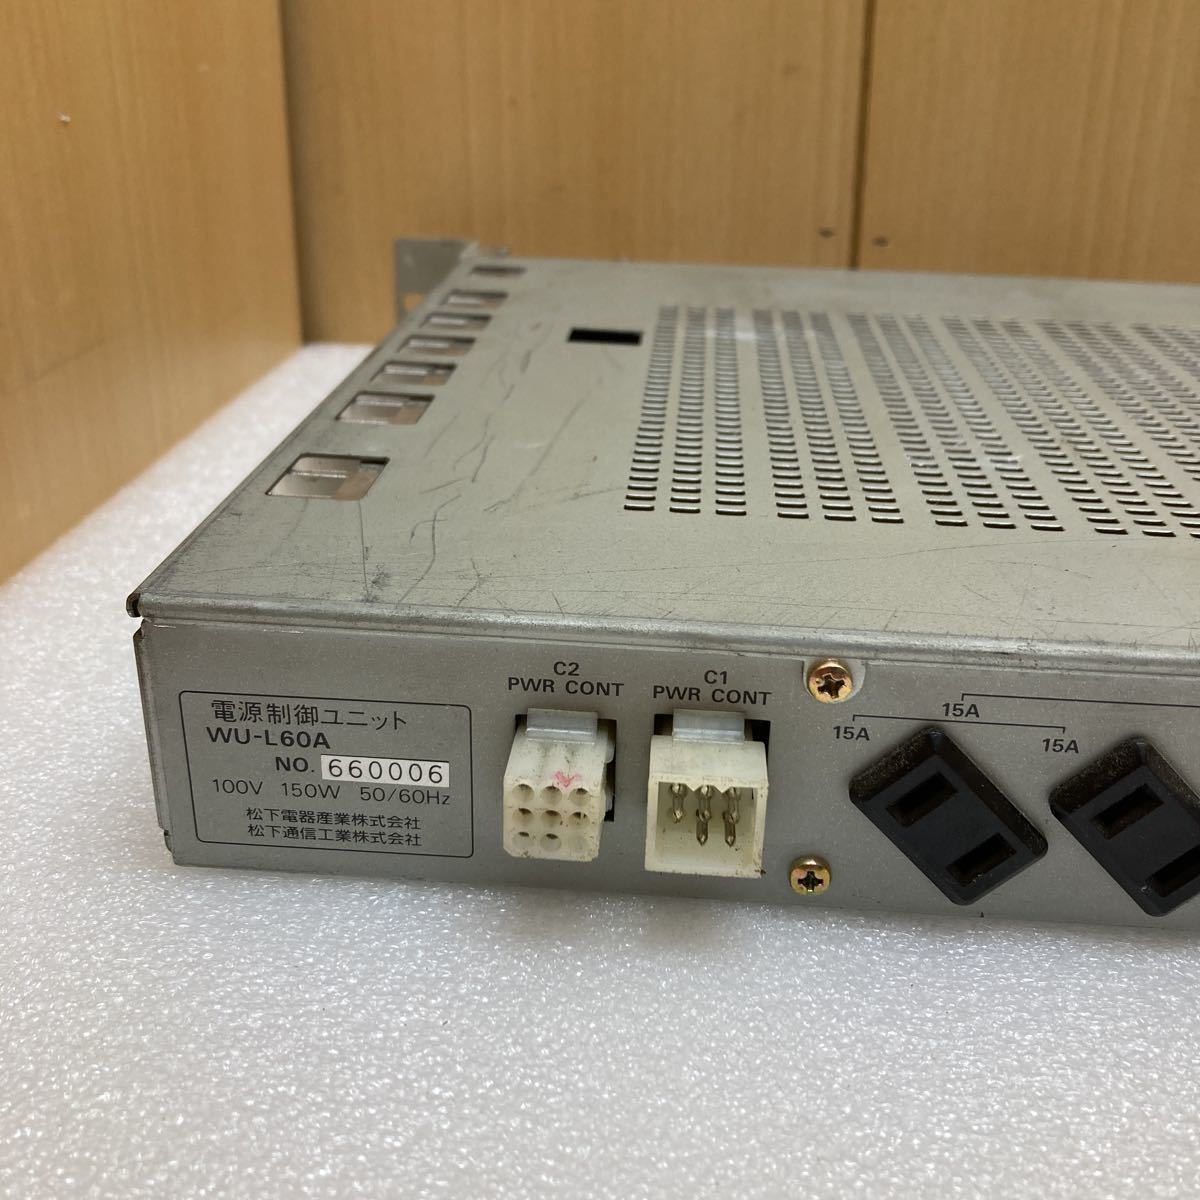 GXL9891 Panasonic Panasonic power supply control unit WU-L60A operation not yet verification present condition goods 1109